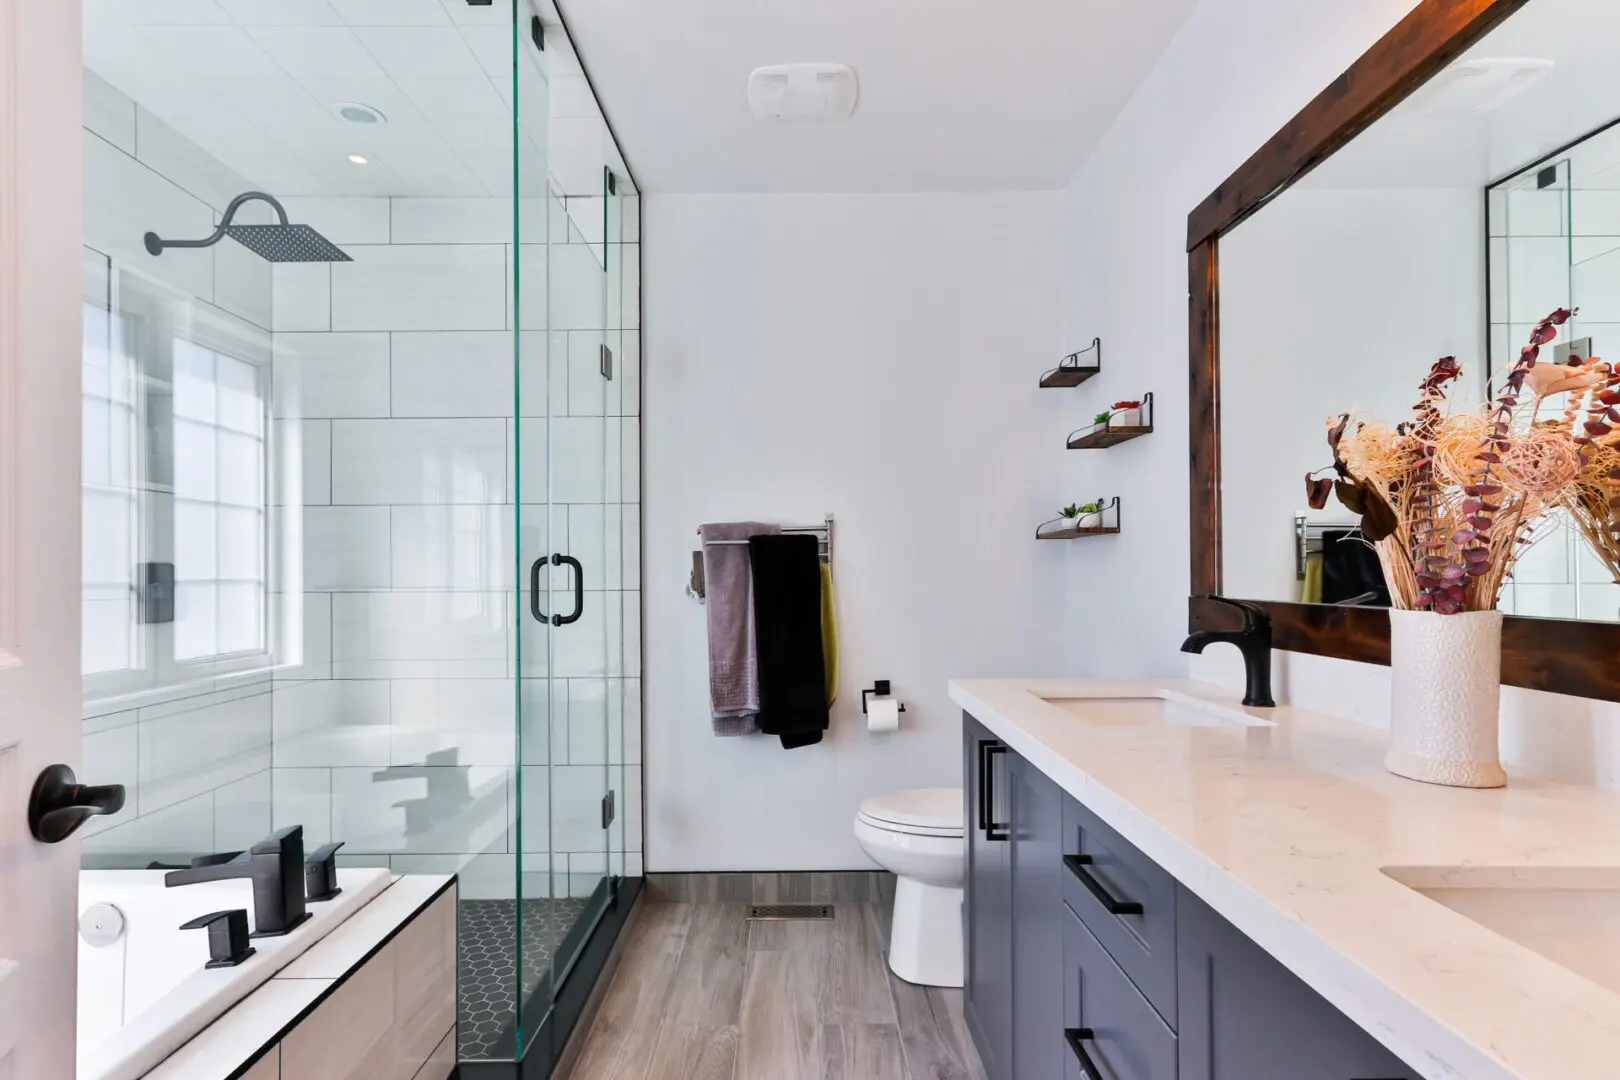 A bathroom with a modern design